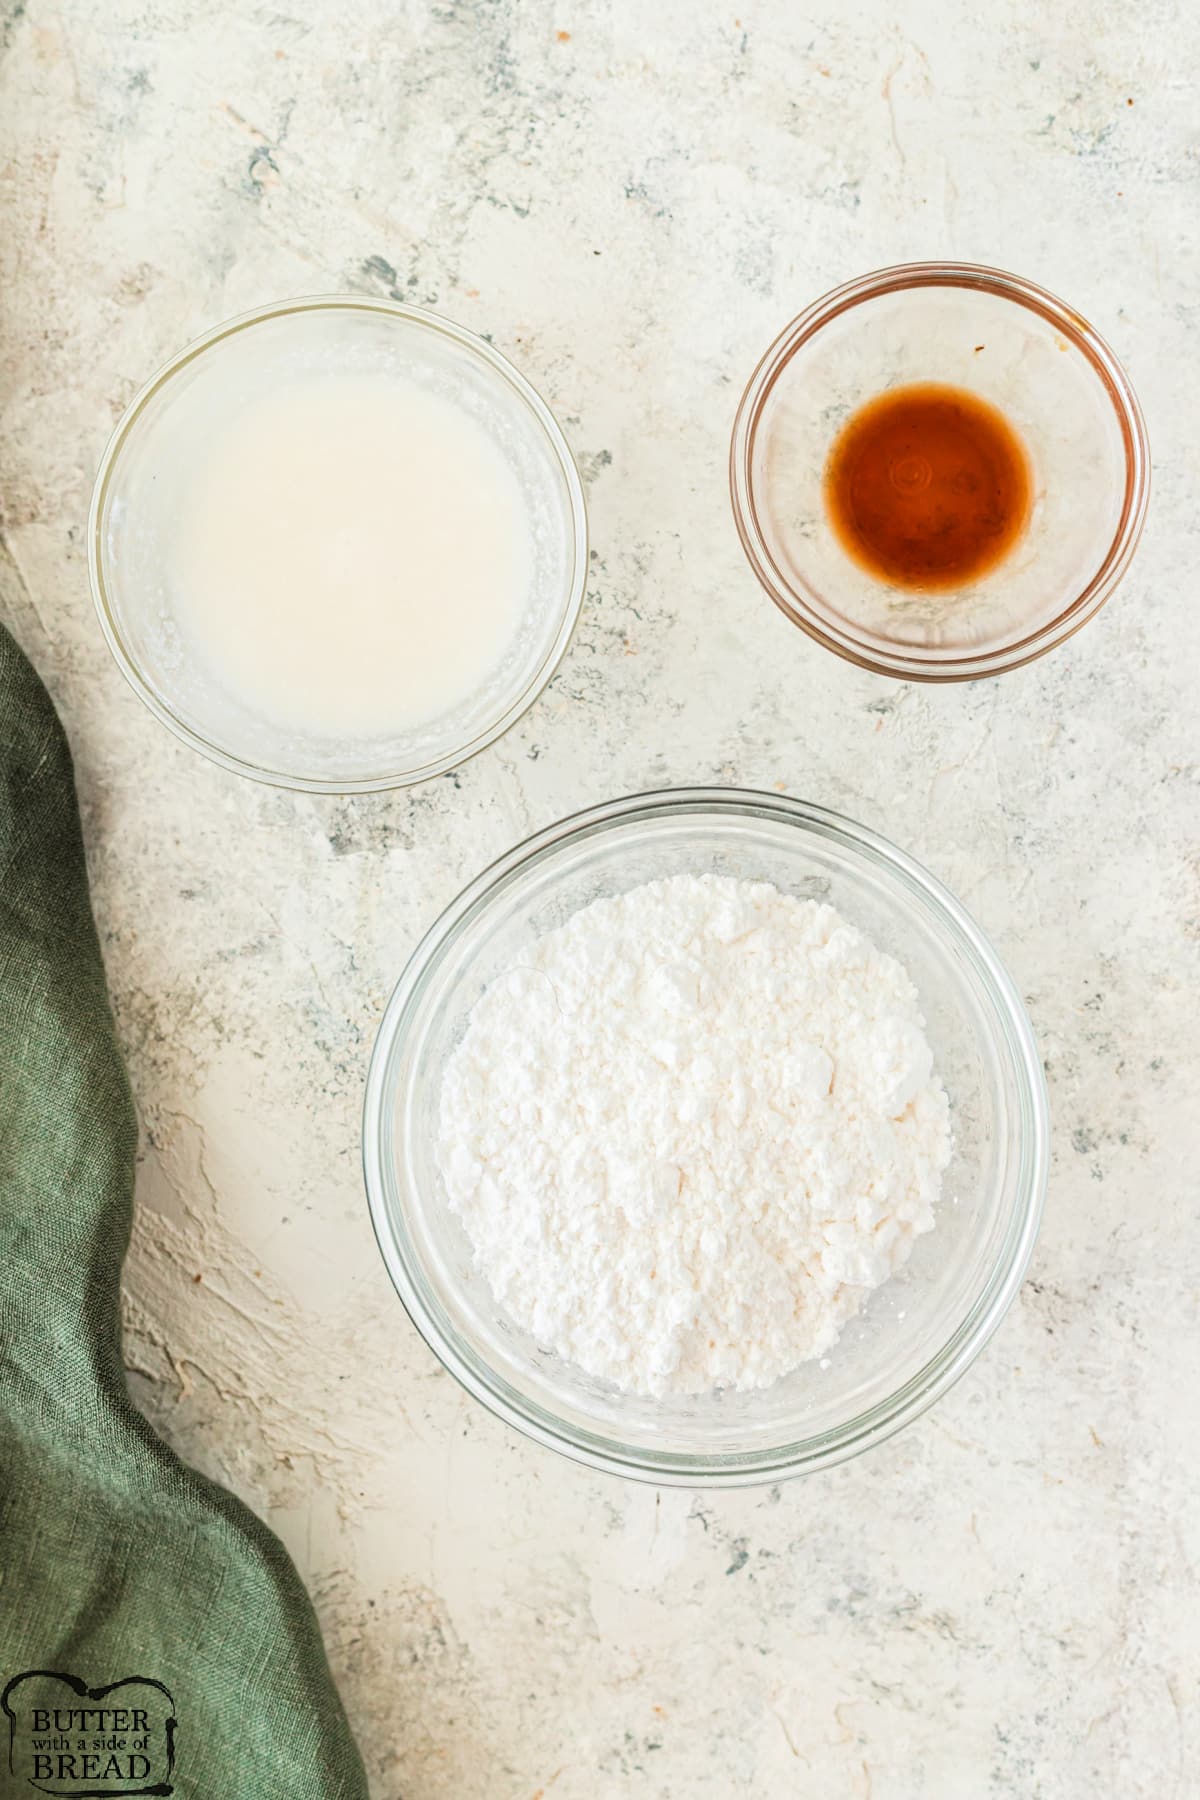 Ingredients in simple powdered sugar glaze